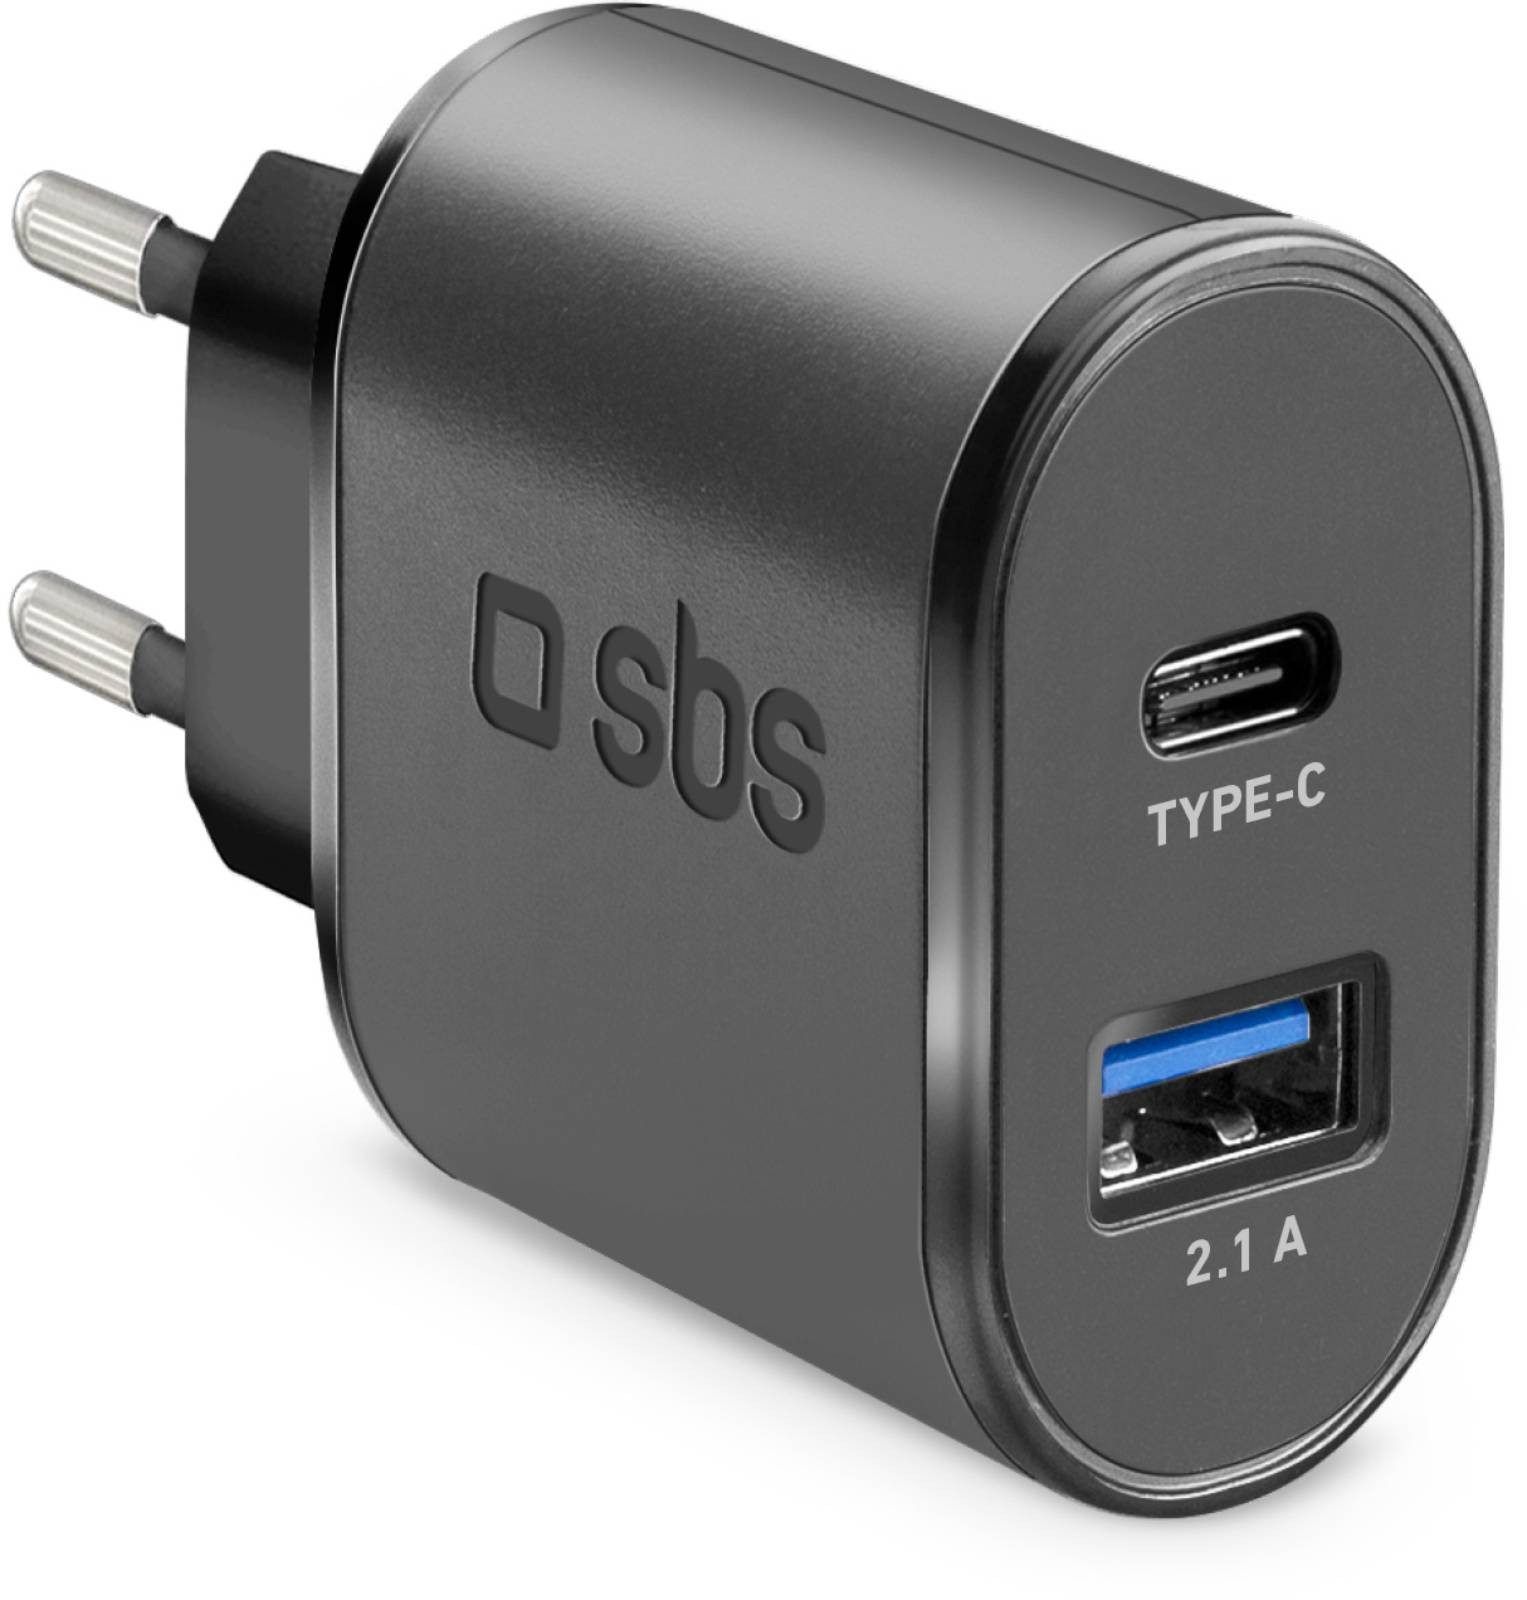 SBS Chargeur secteur Chargeur USB portable - Type C à chargement rapide - CHARG-TYPEC-USBA